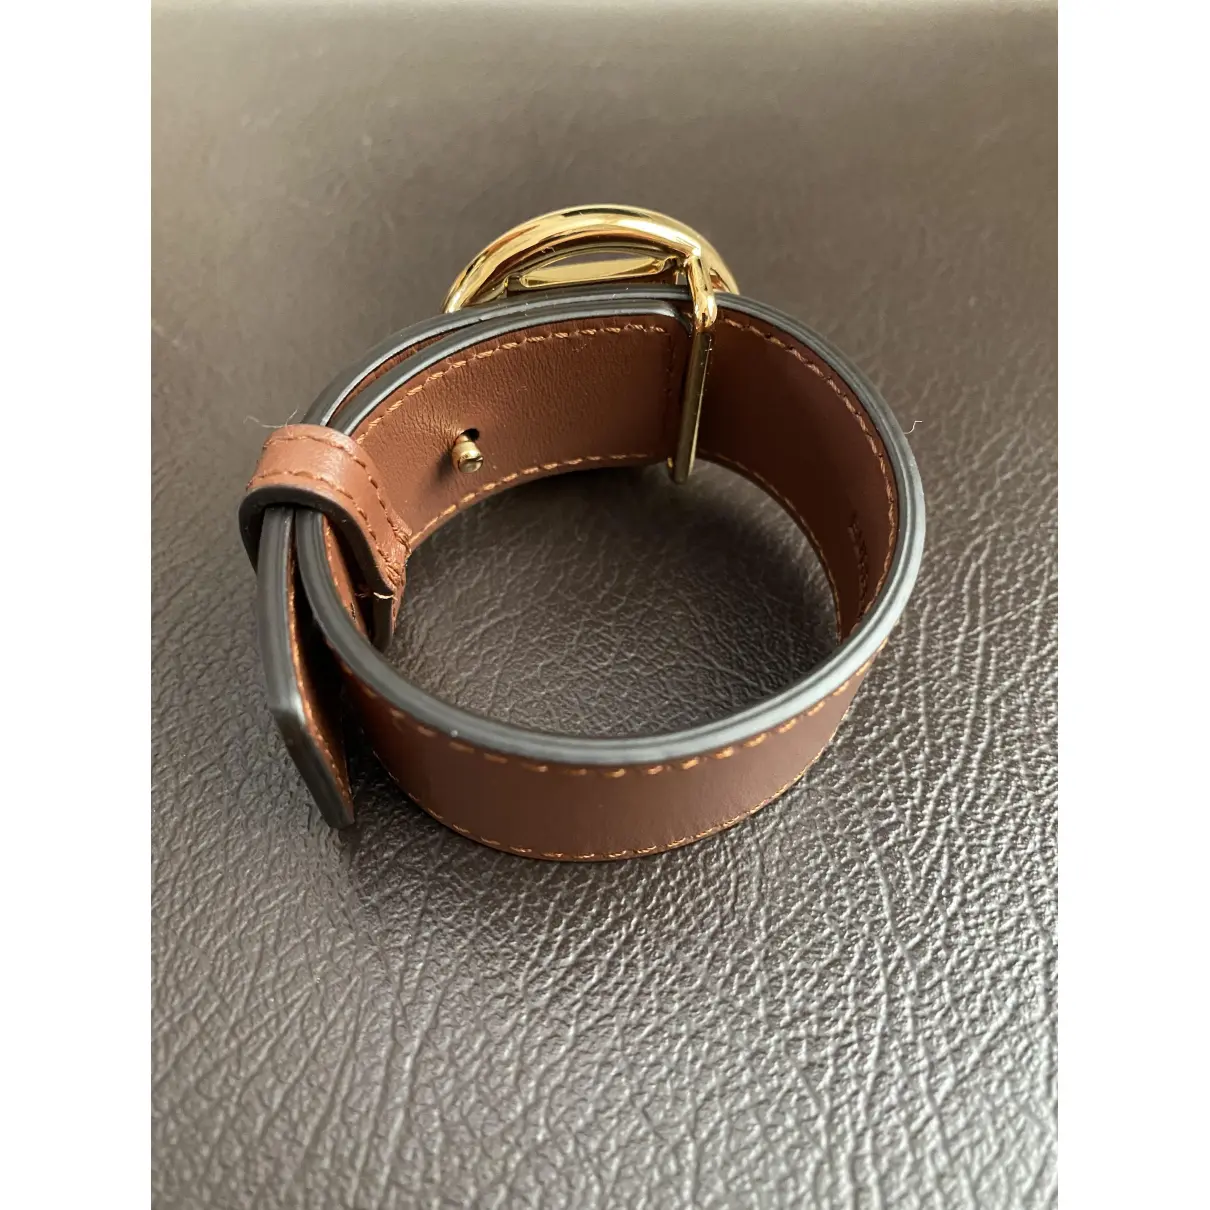 Buy Burberry Leather bracelet online